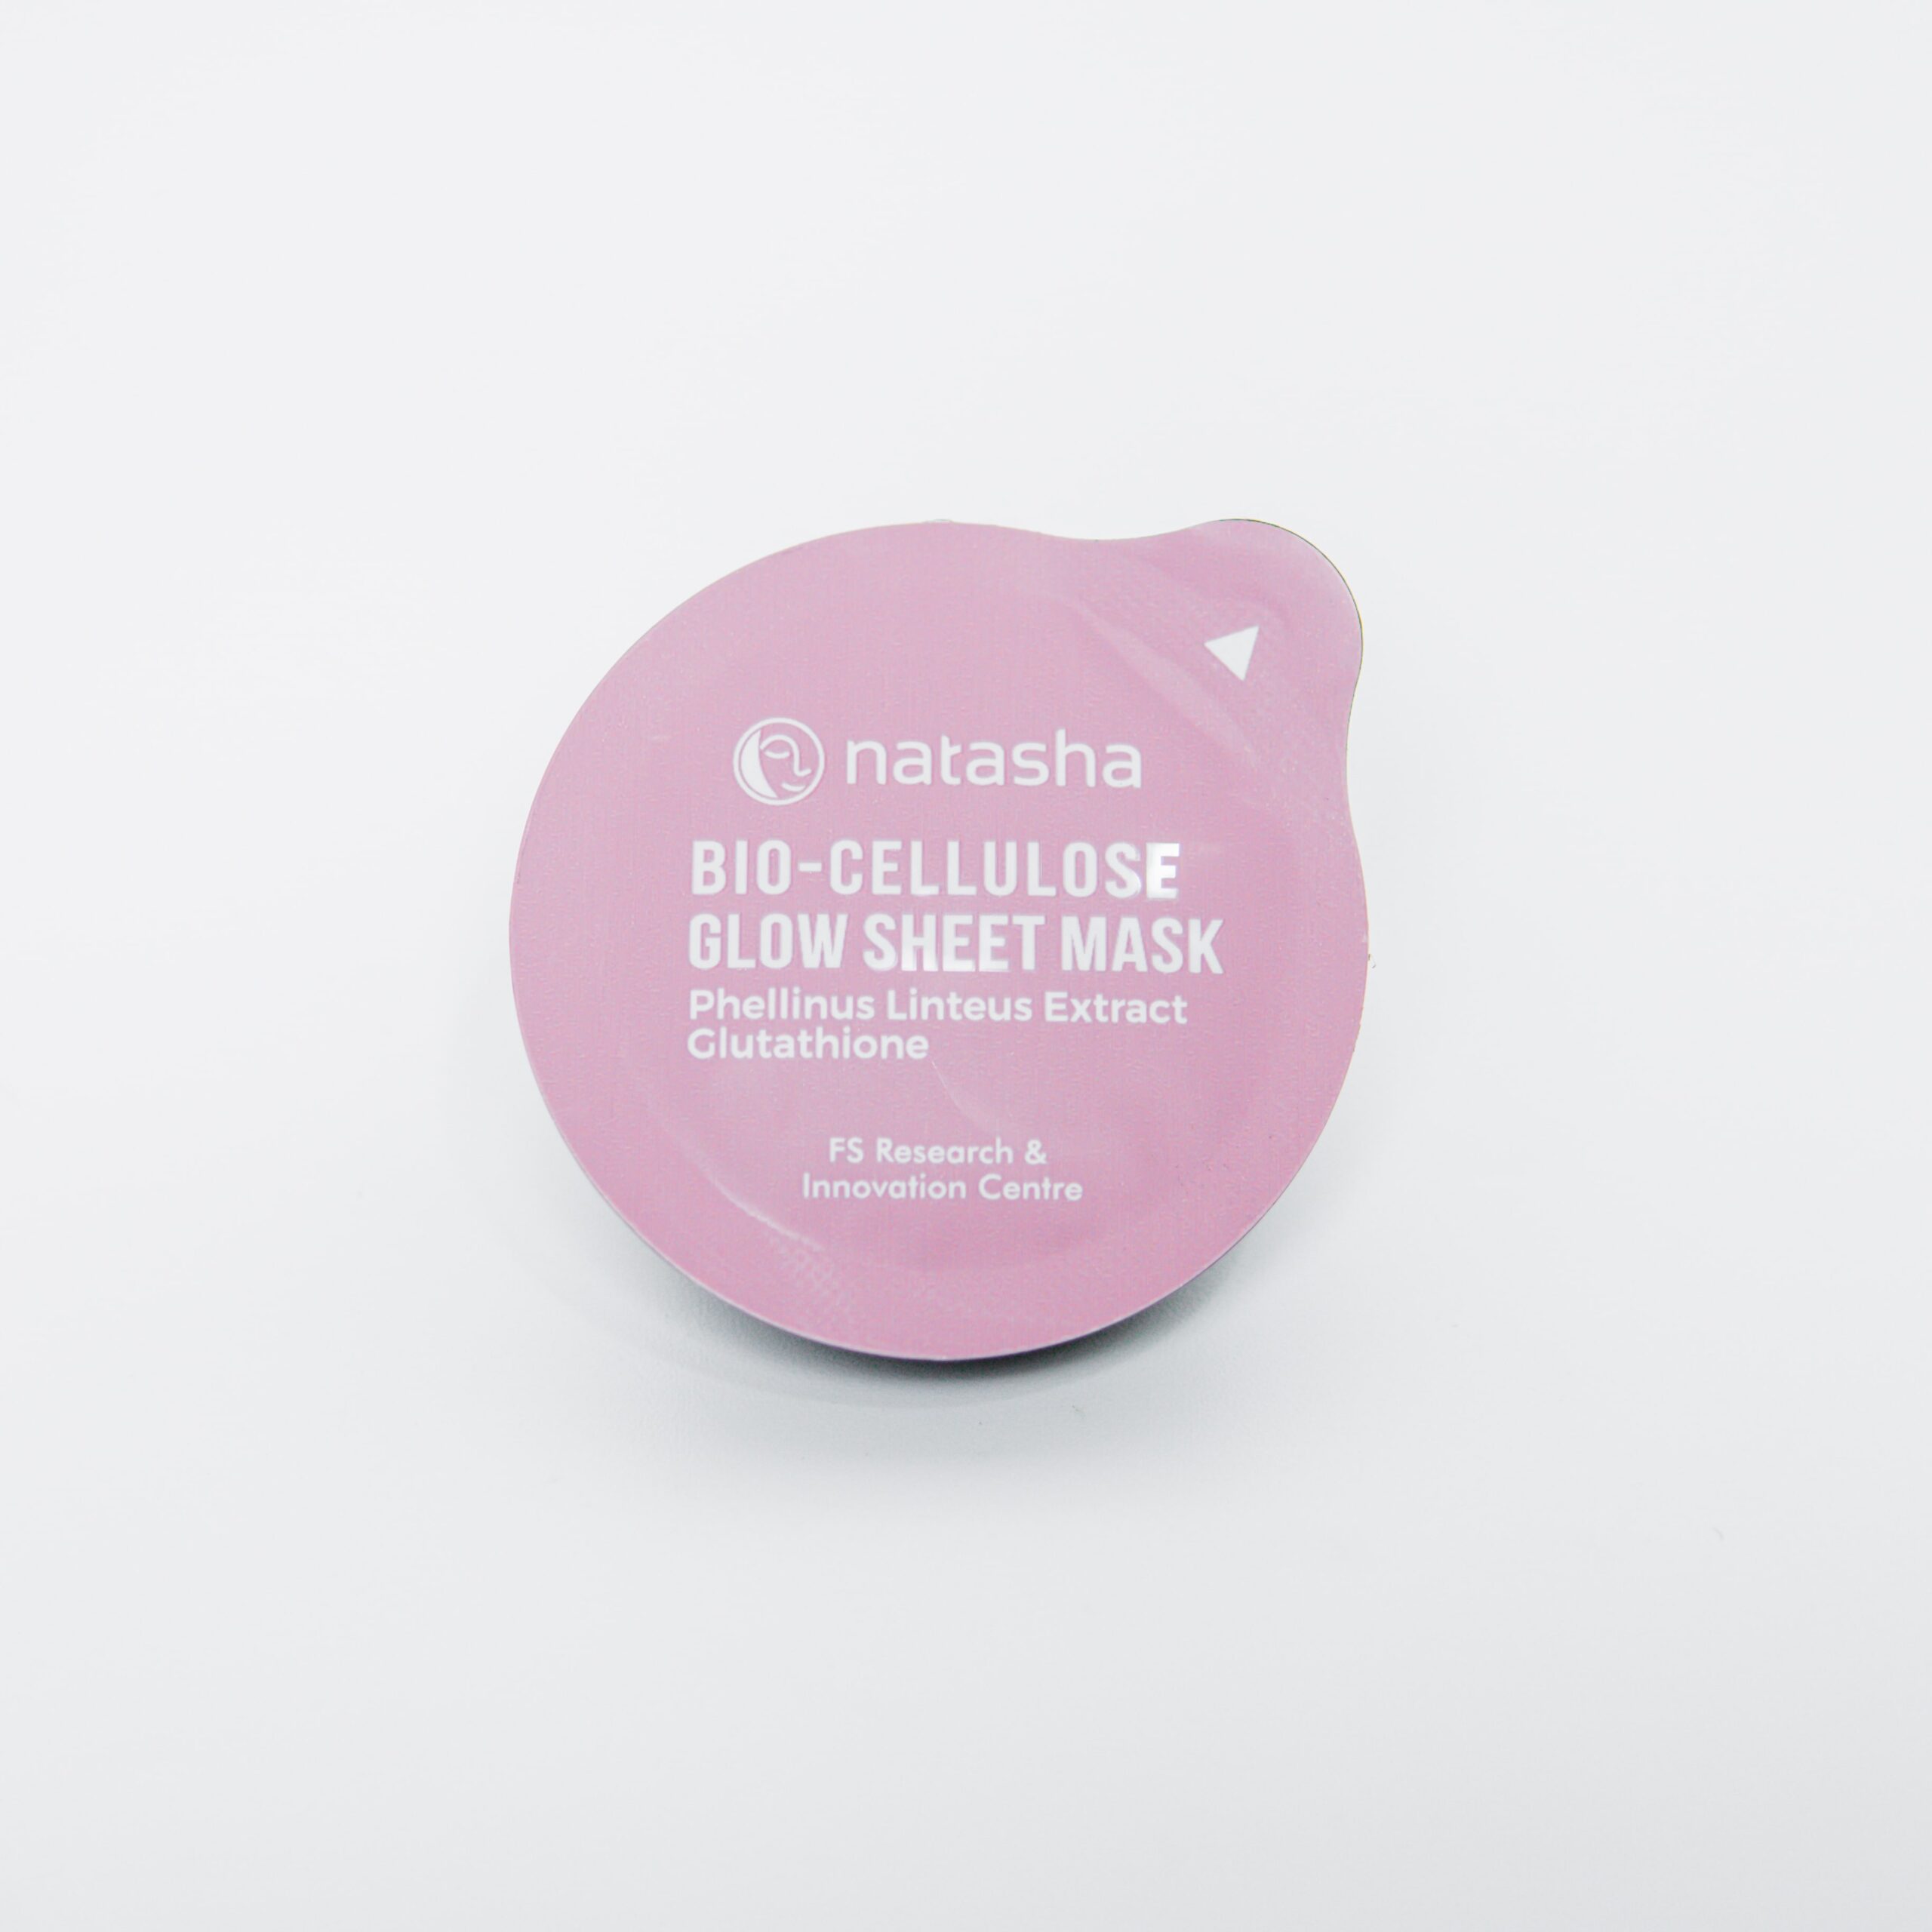 Natasha Bio-Cellulose Glow Sheet Mask Cup